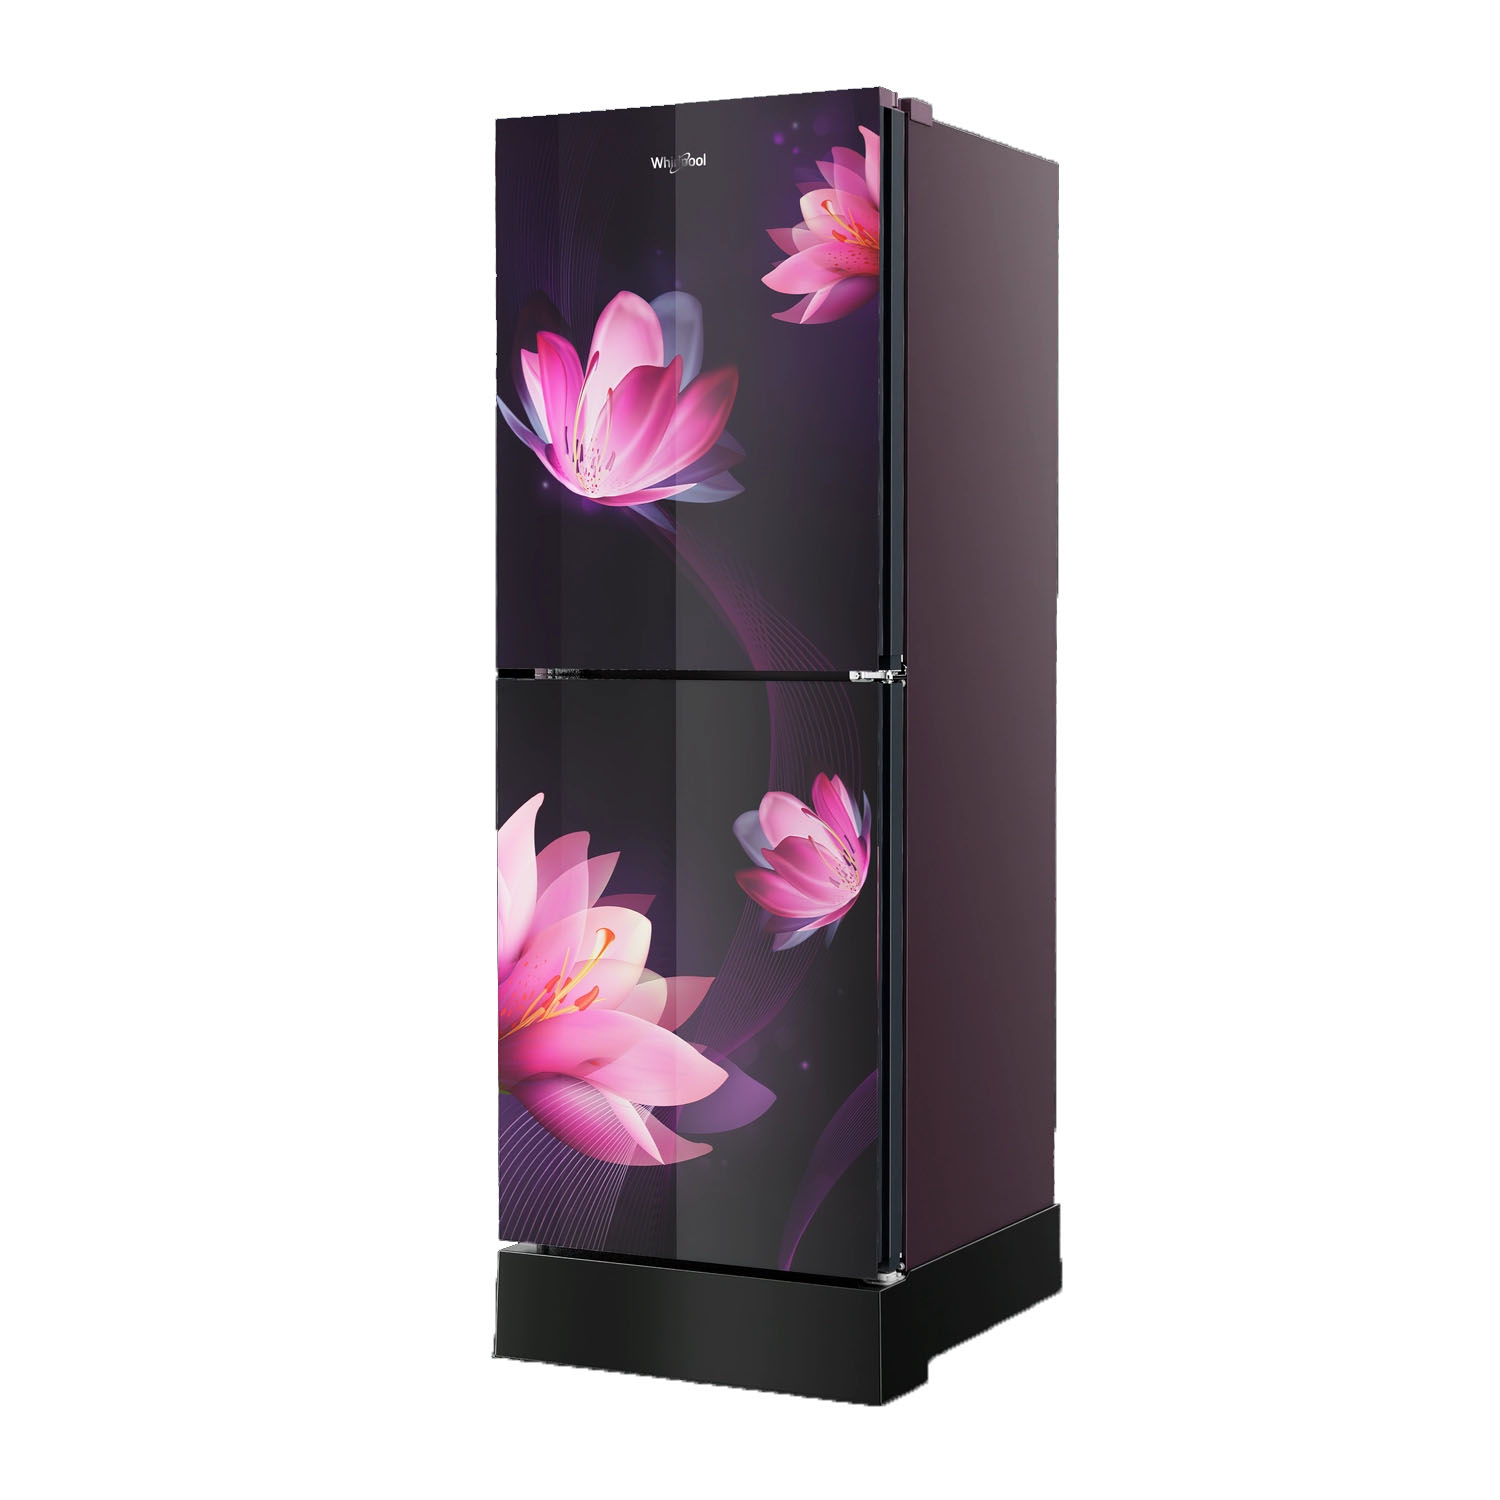 WHIRLPOOL 278 Liter Refrigerator FreshMagic Pro Florina Purple